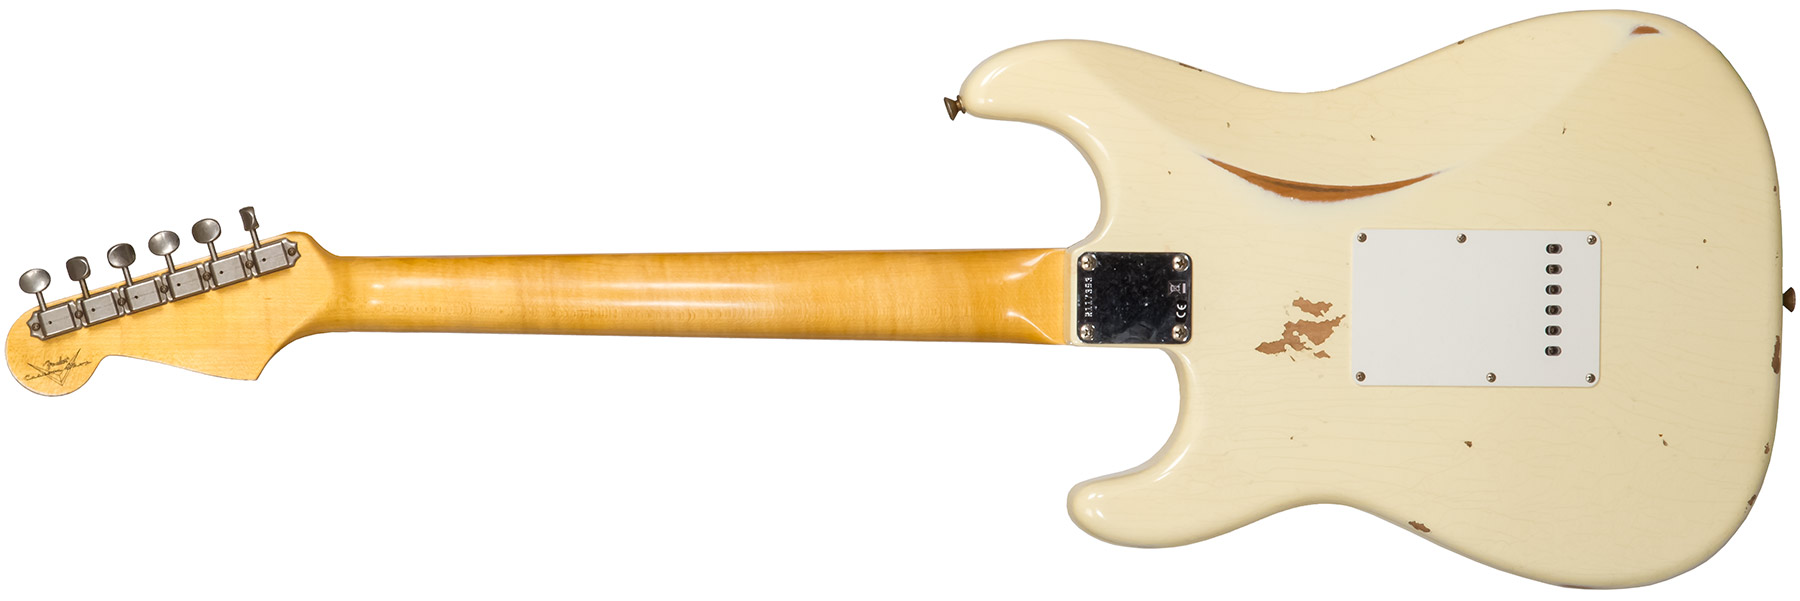 Fender Custom Shop Strat 1959 3s Trem Rw #r117393 - Relic Aged Vintage White - Guitarra eléctrica con forma de str. - Variation 1